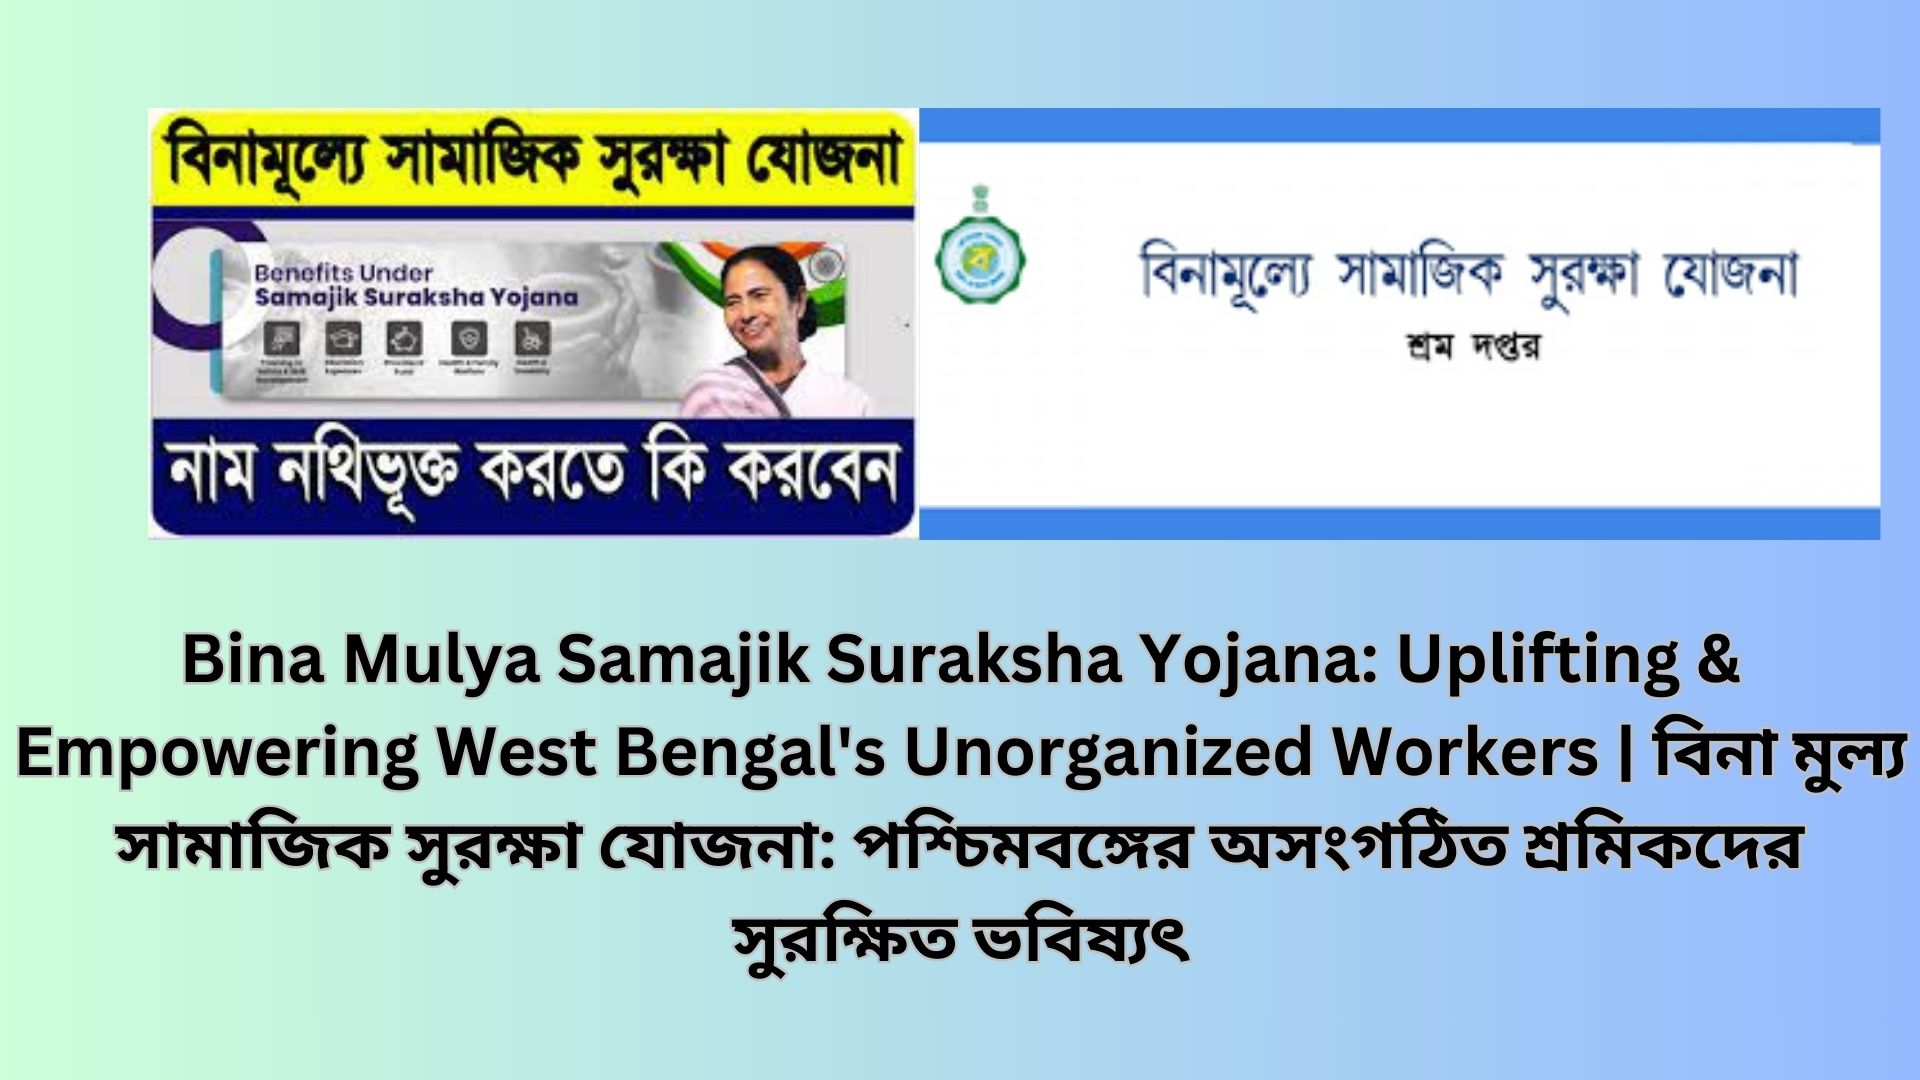 Bina Mulya Samajik Suraksha Yojana: Uplifting & Empowering West Bengal's Unorganized Workers | বিনা মুল্য সামাজিক সুরক্ষা যোজনা: পশ্চিমবঙ্গের অসংগঠিত শ্রমিকদের সুরক্ষিত ভবিষ্যৎ